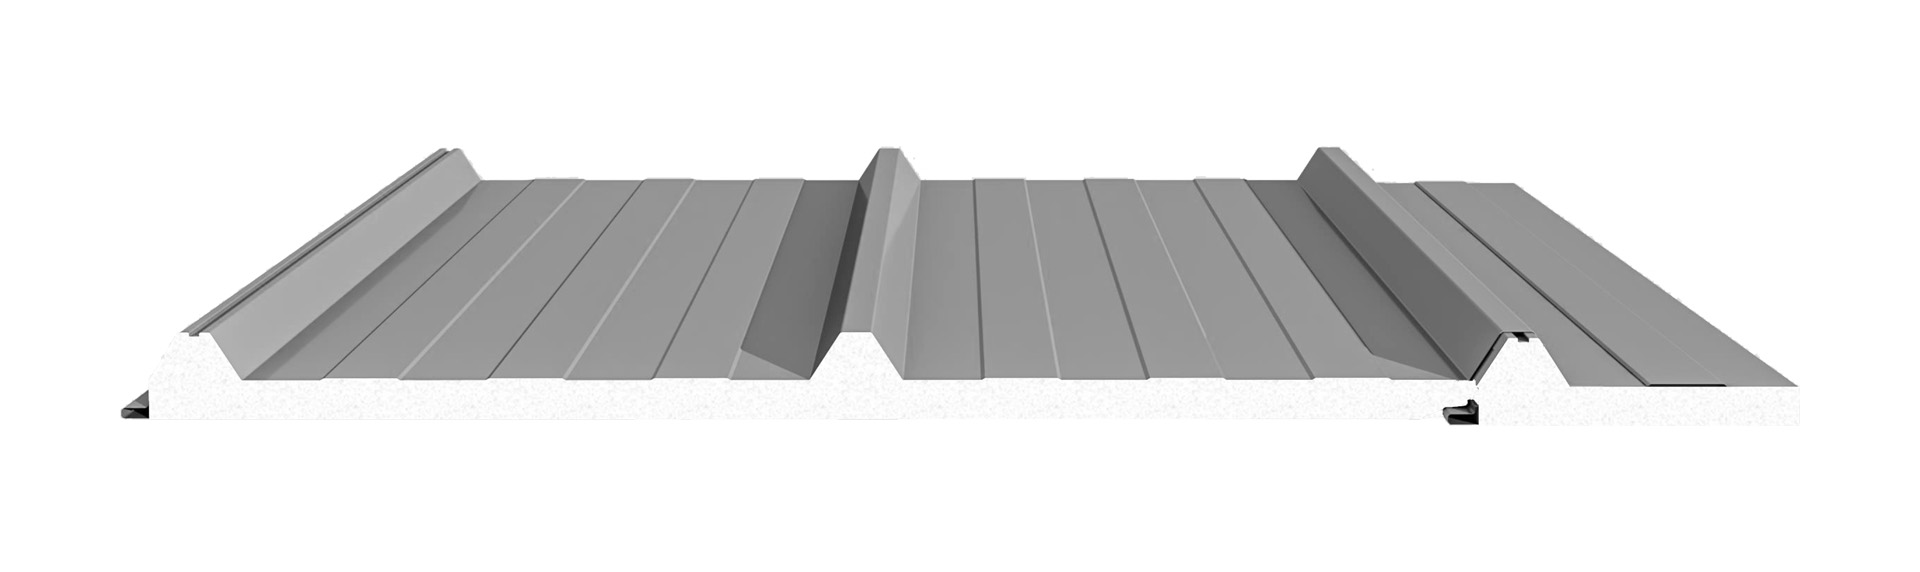 eps-3-ribs-roof-panel